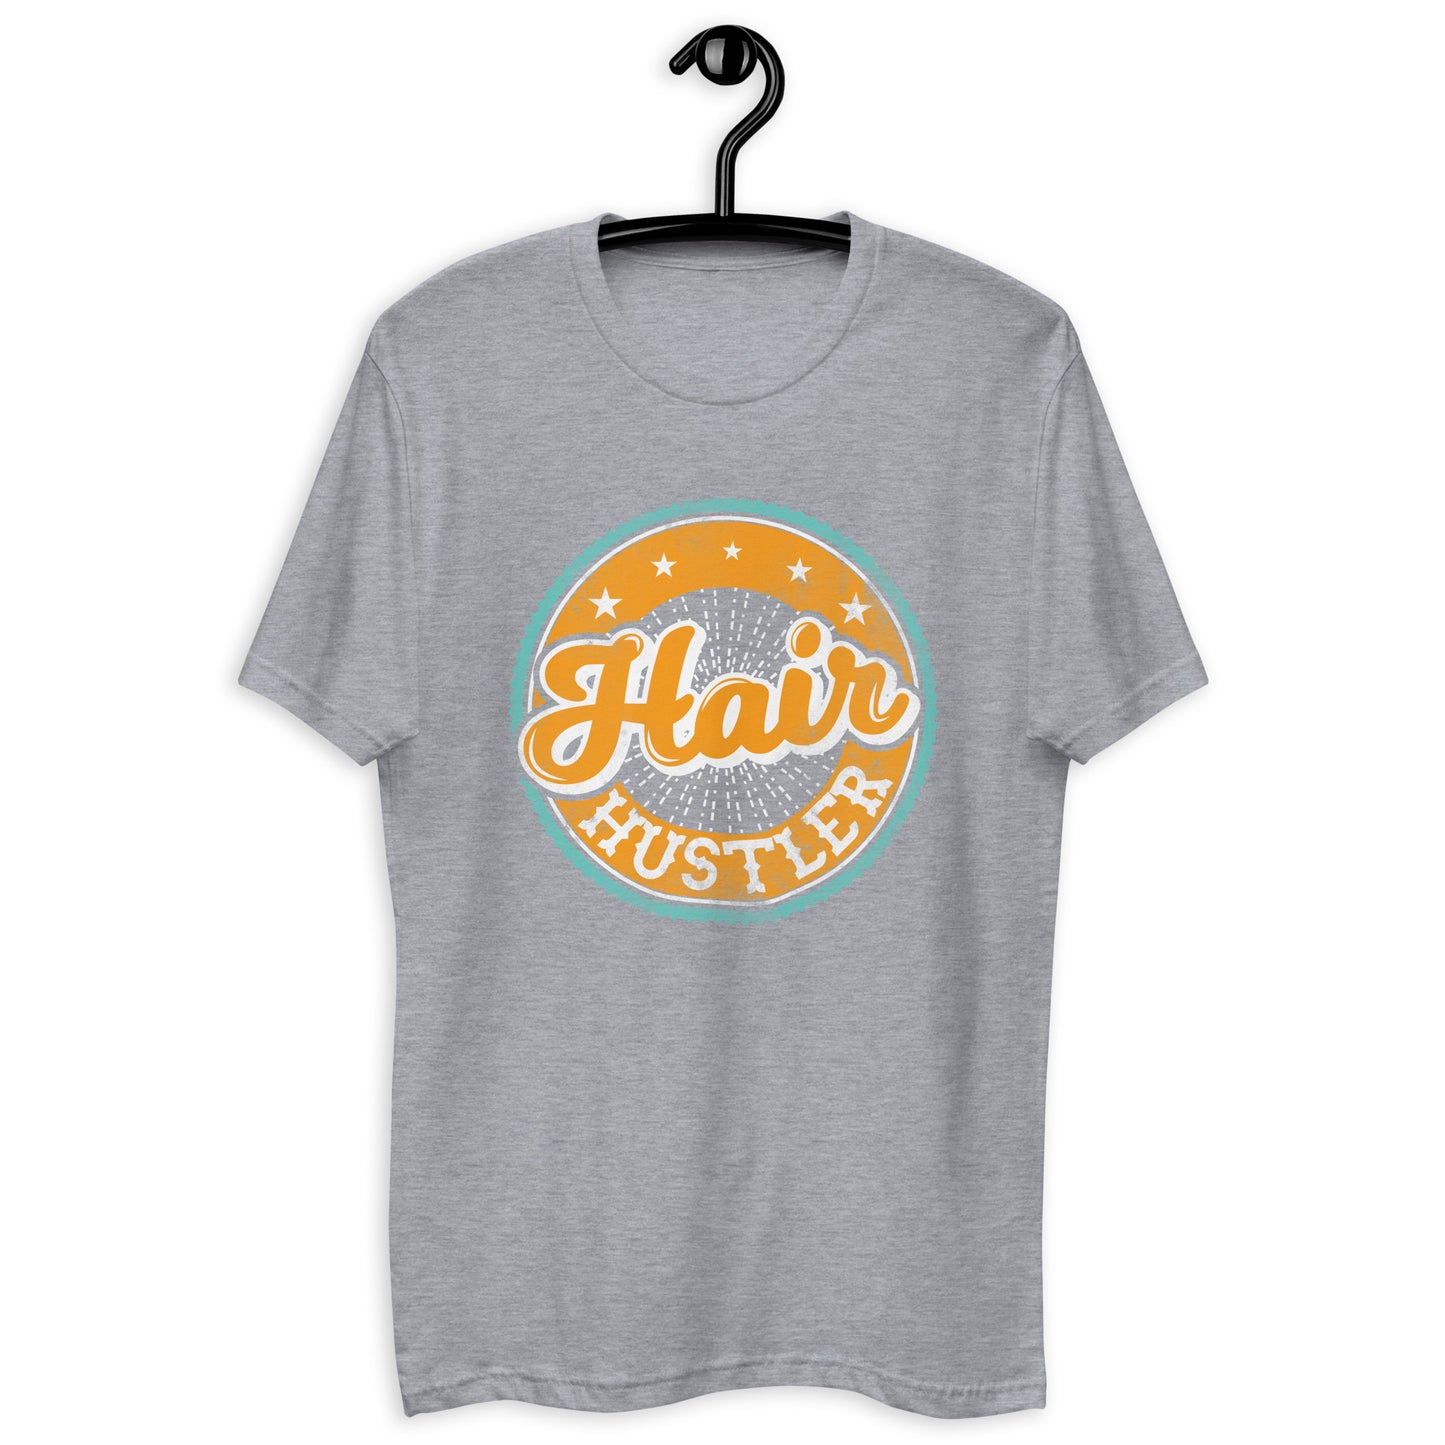 Hair Hustler T-shirt